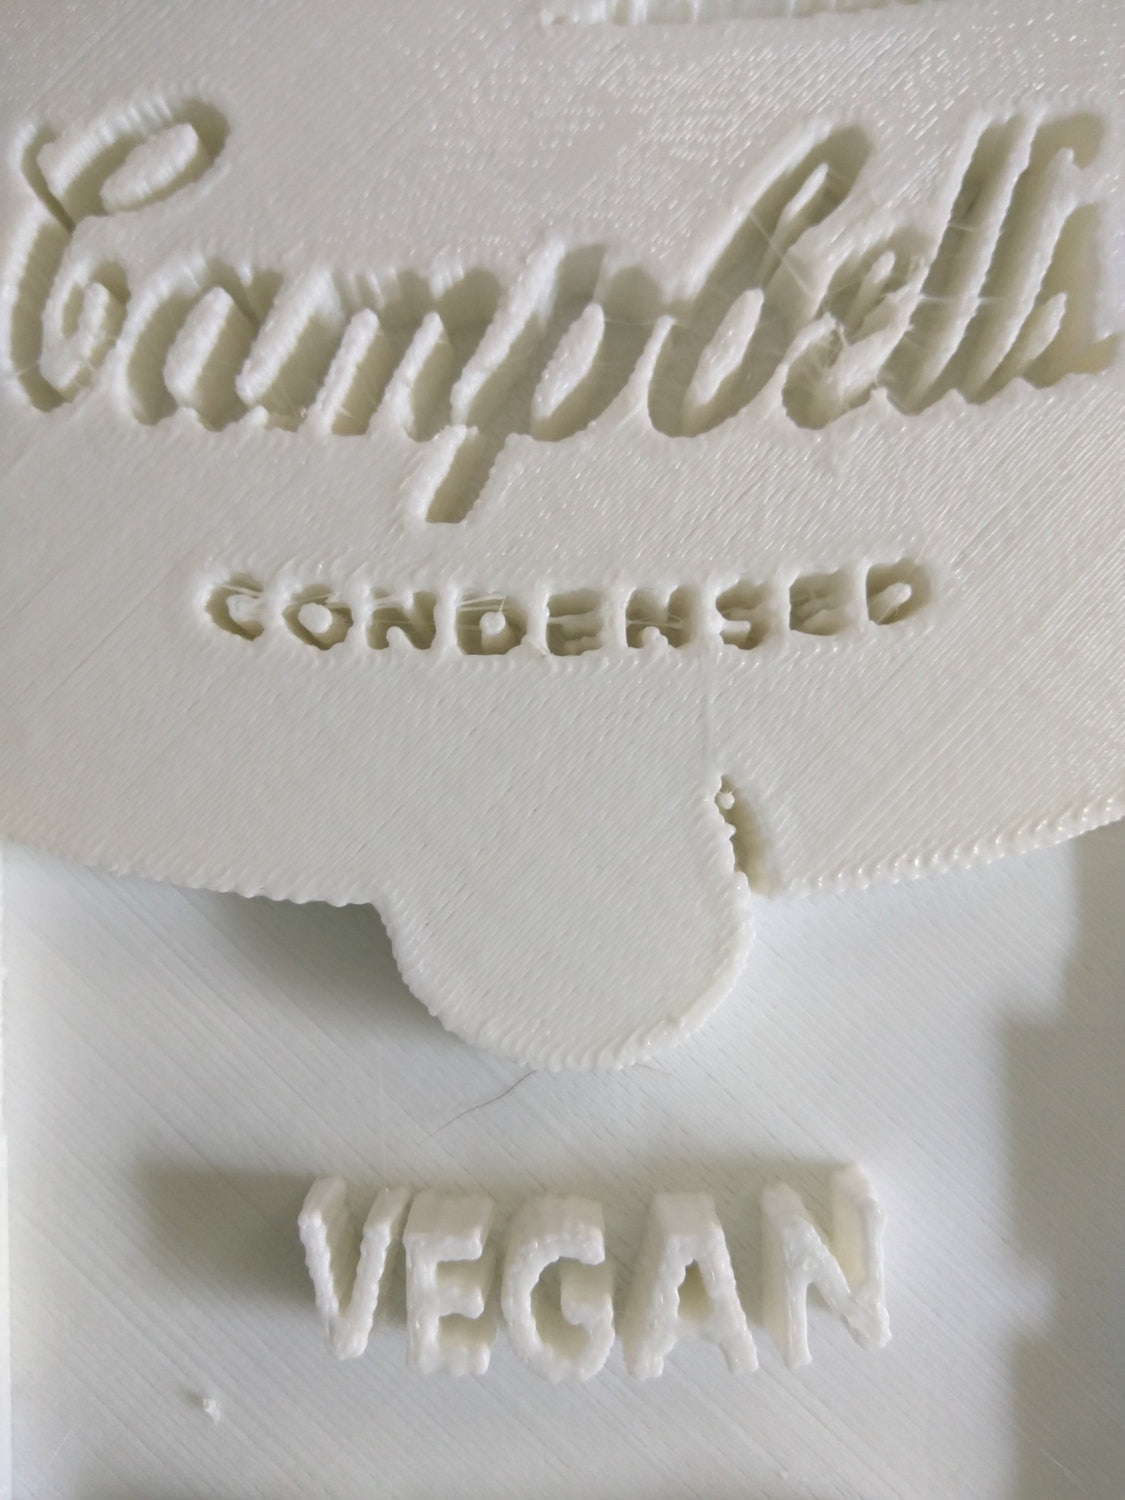 3D printed Campbell's Vegan Soup by L3f0u